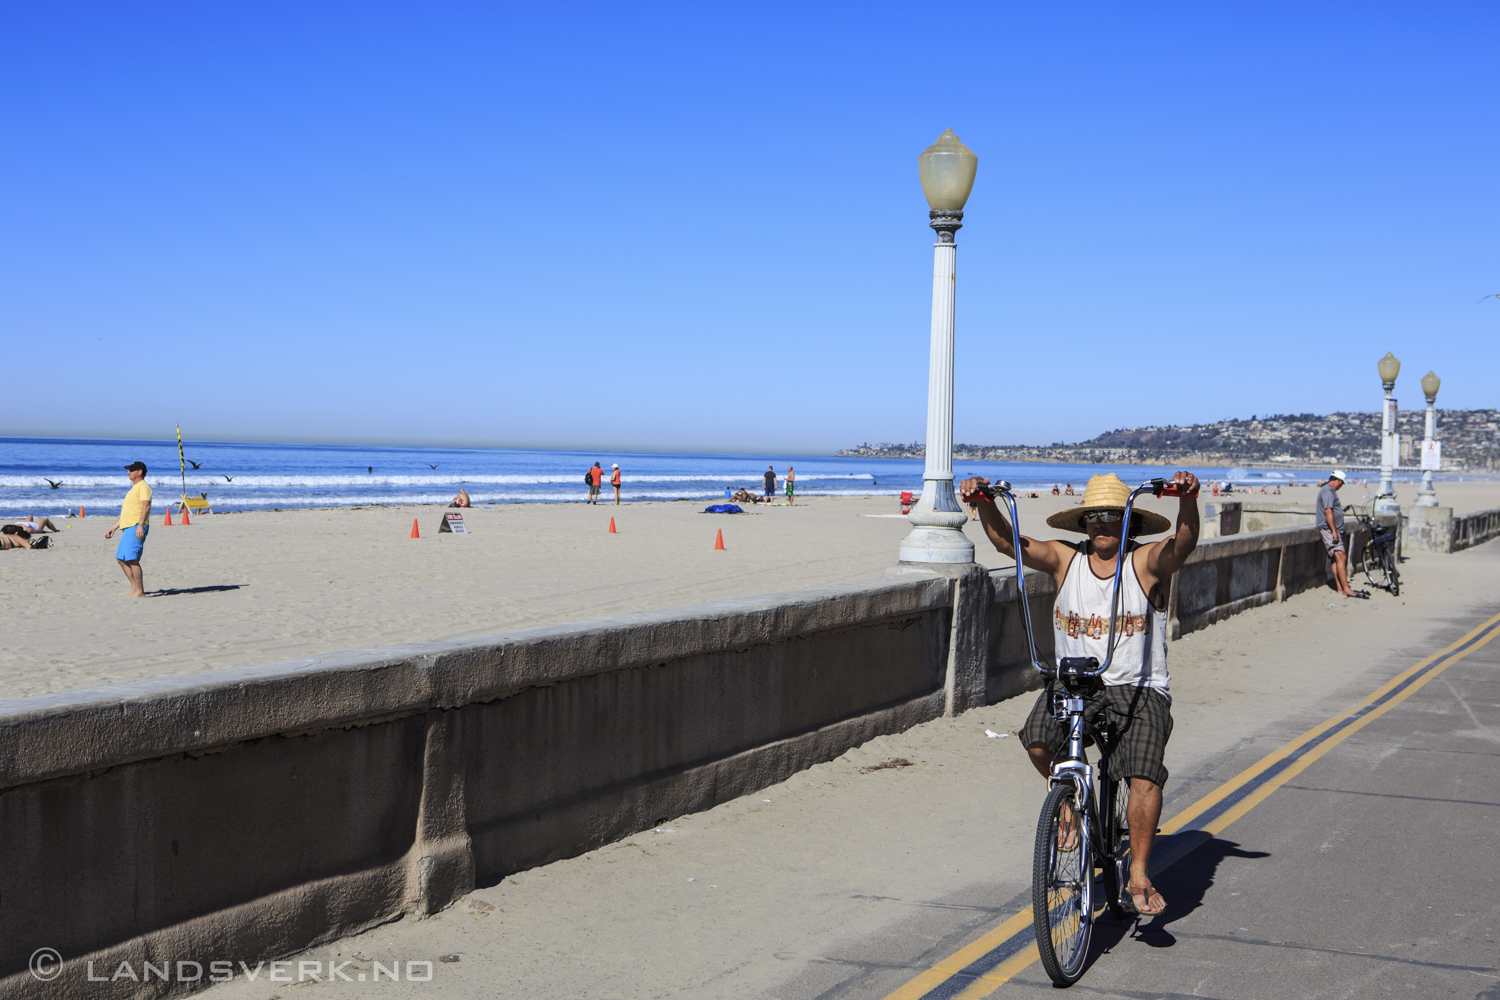 San Diego, California. 

(Canon EOS 5D Mark III / Canon EF 24-70mm f/2.8 L USM)